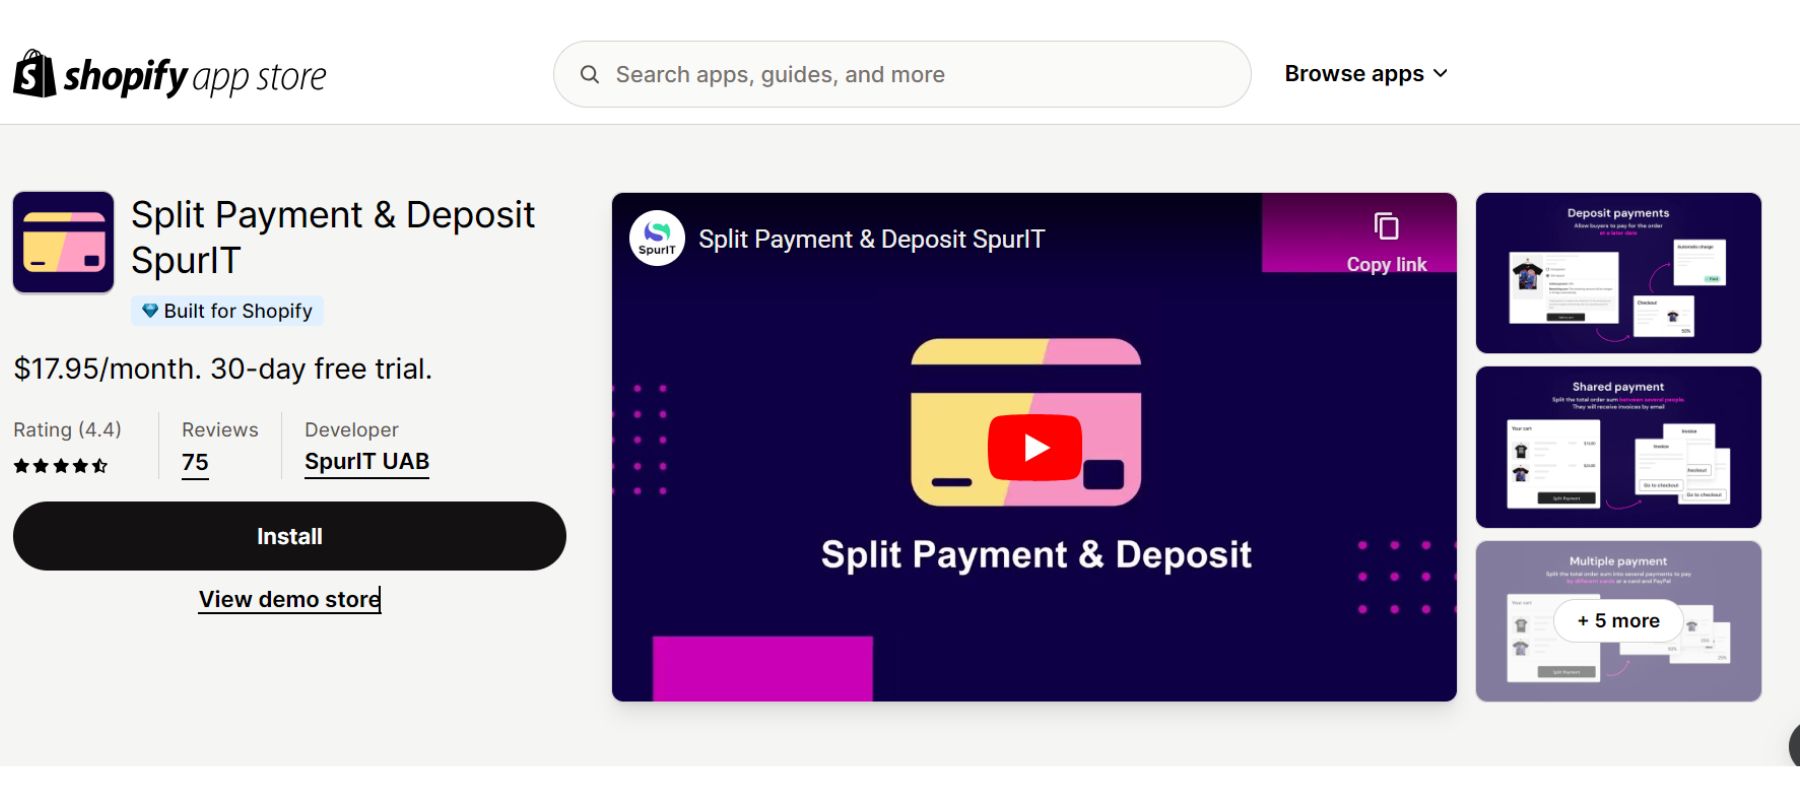 Split Payment & Deposit SpurIT on the Shopify App Store